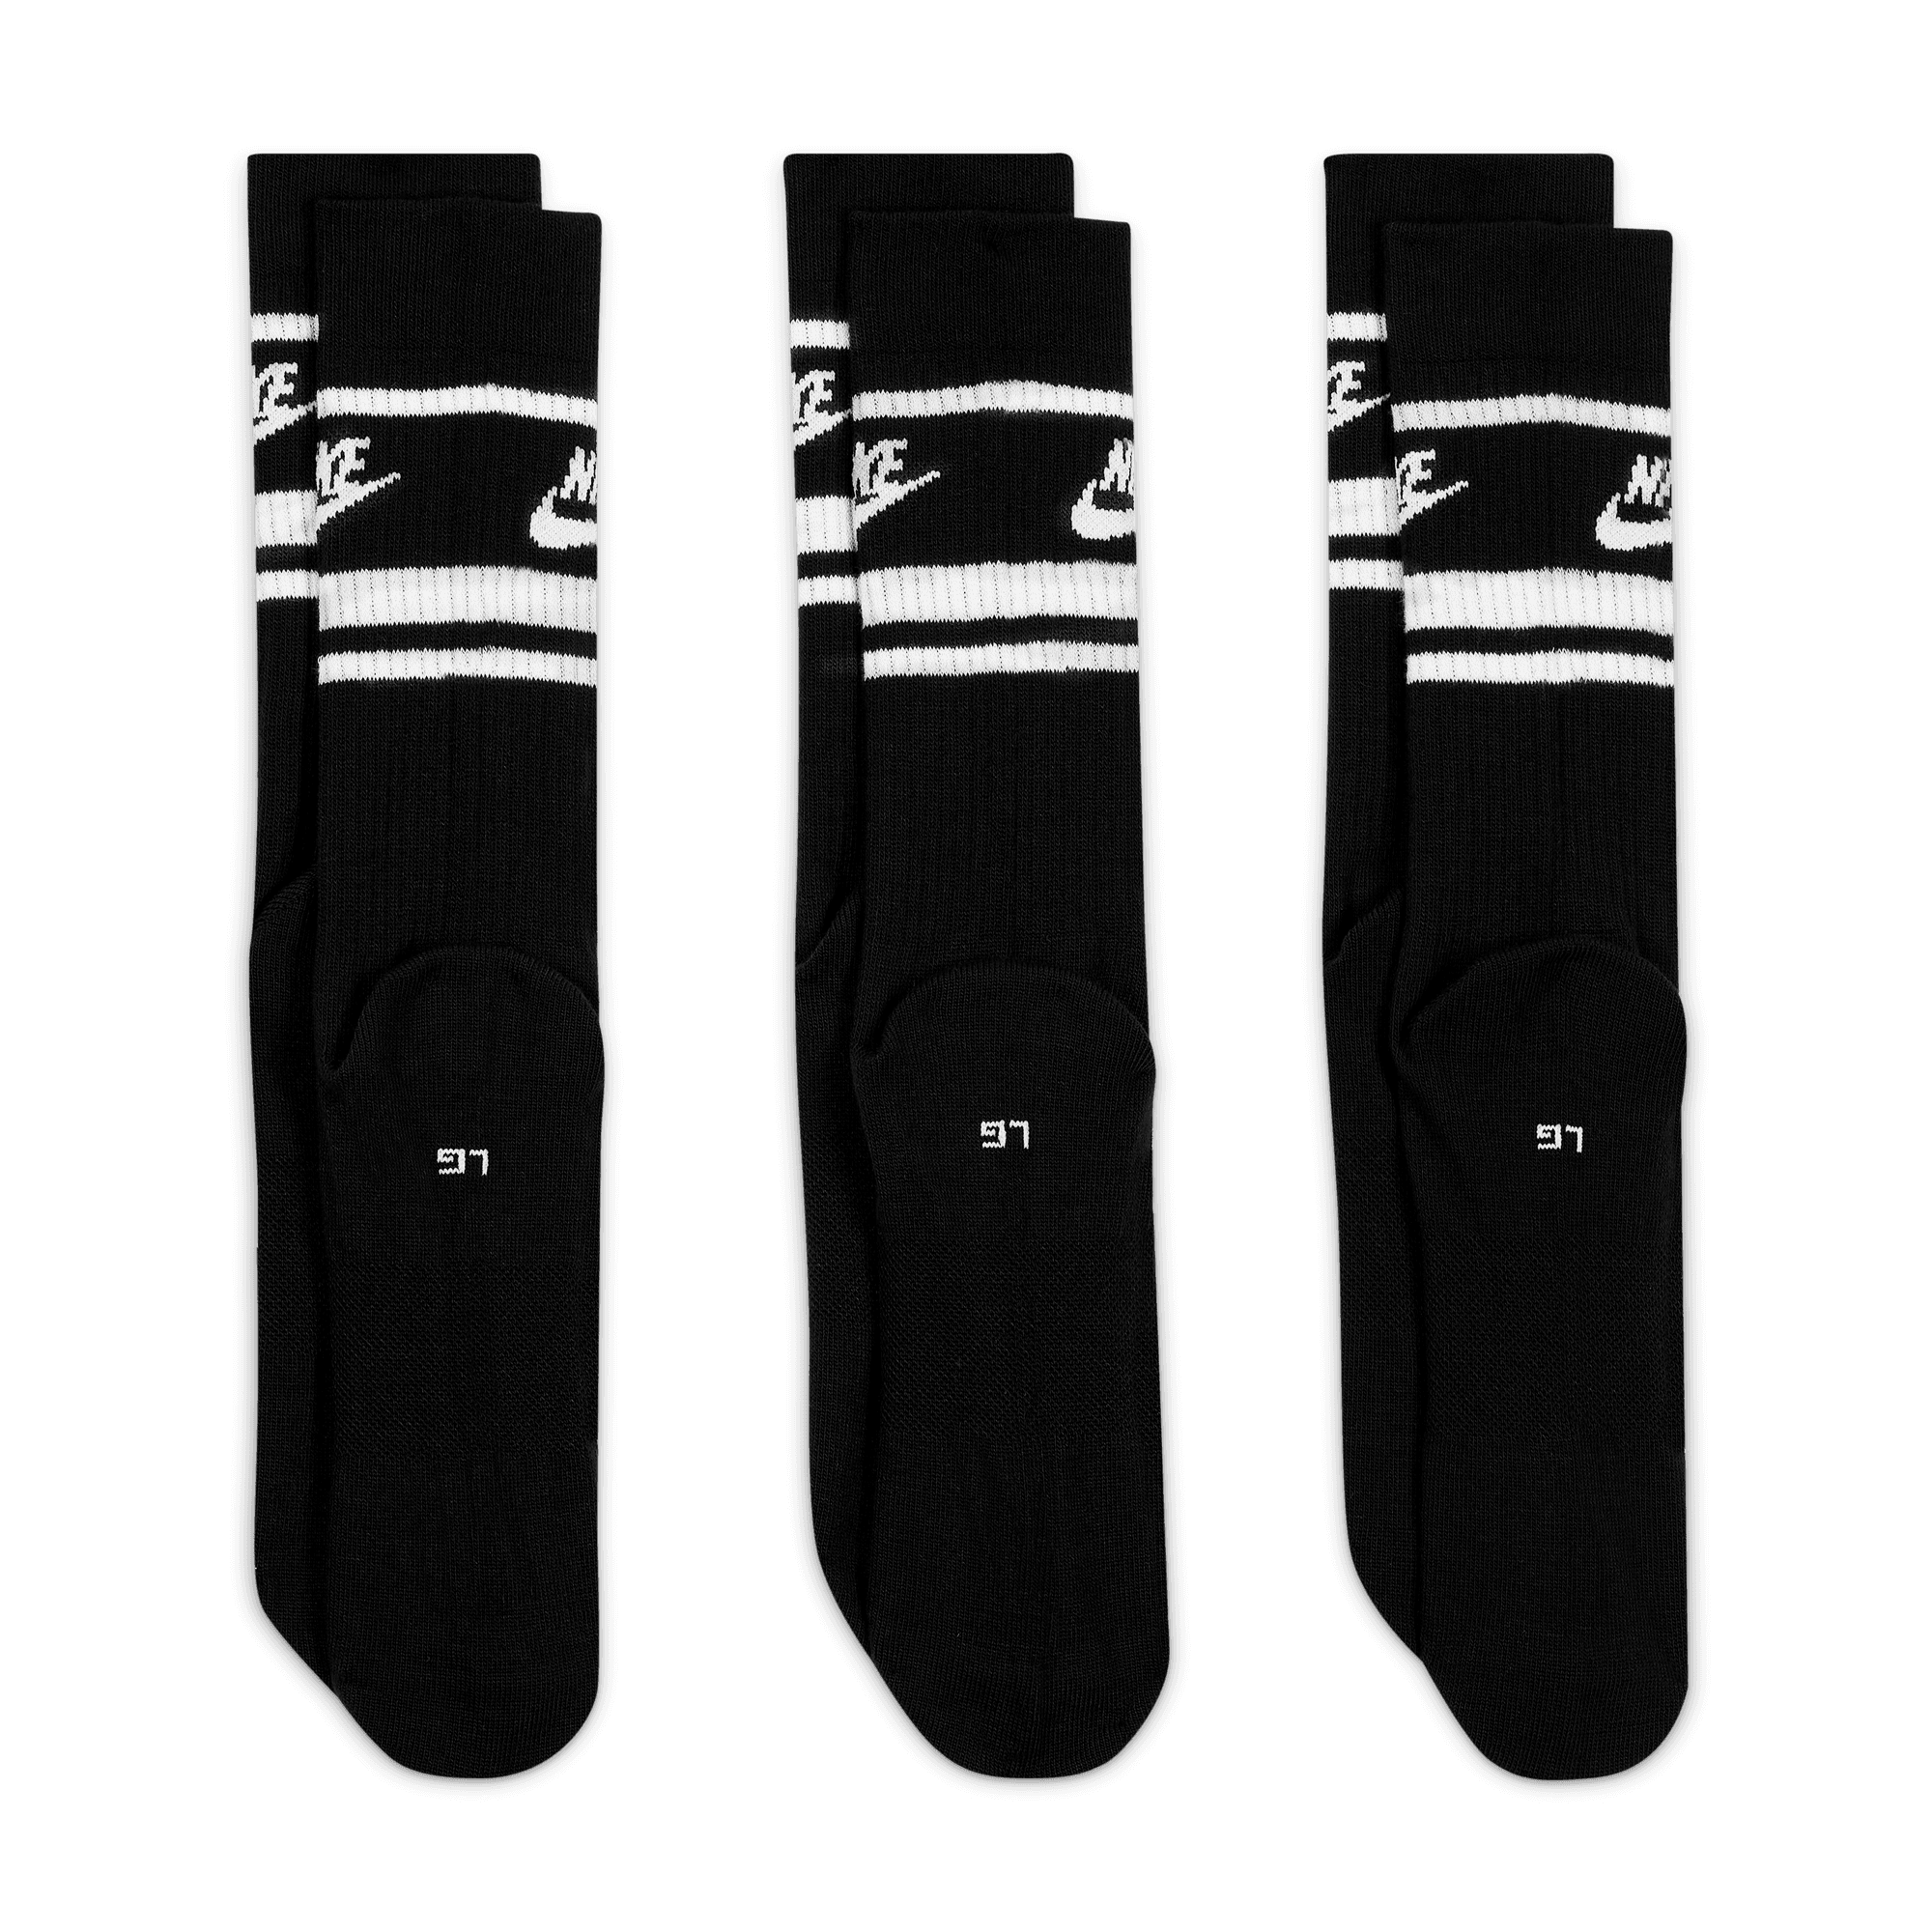 NSW Everyday Socks DX5089-010 Black